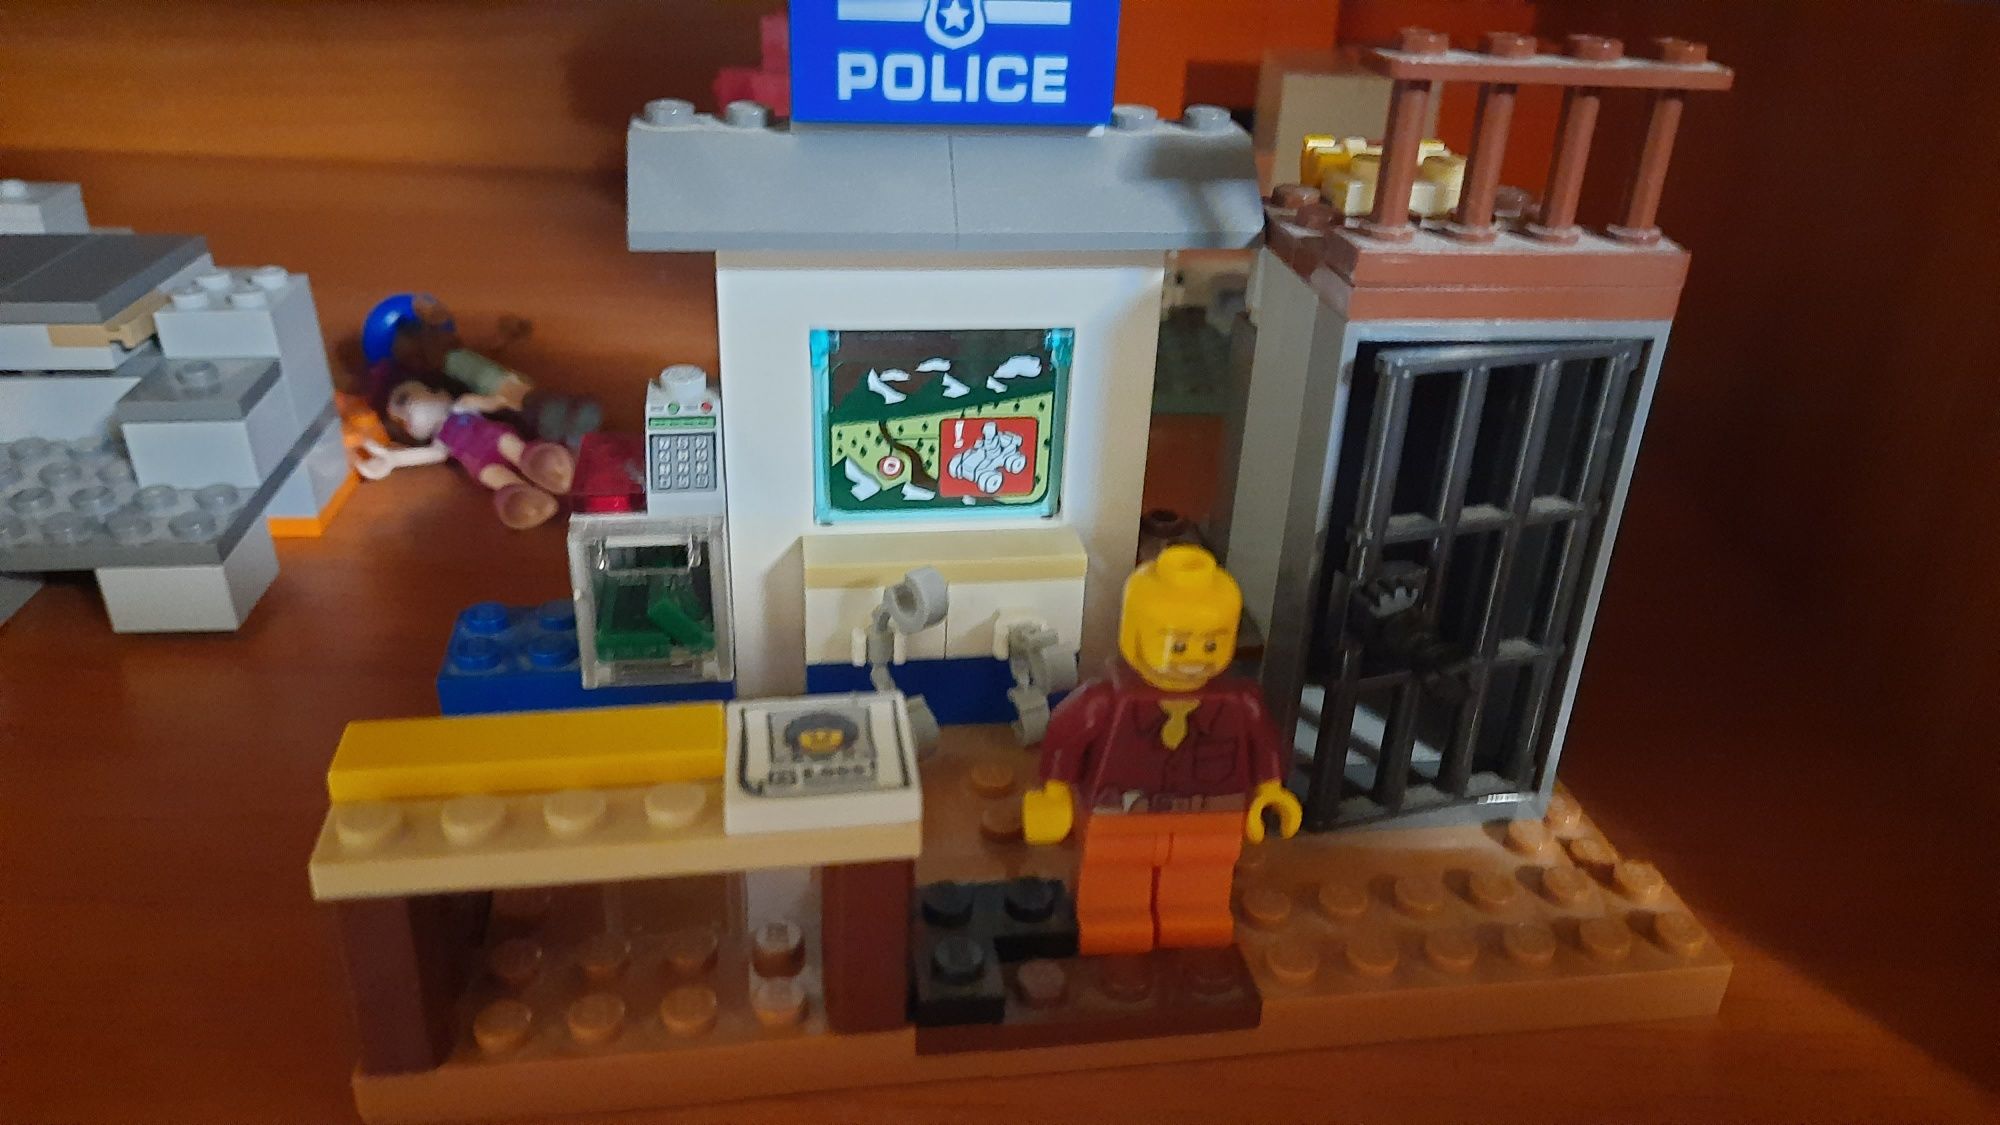 Mica secție de politie lego original